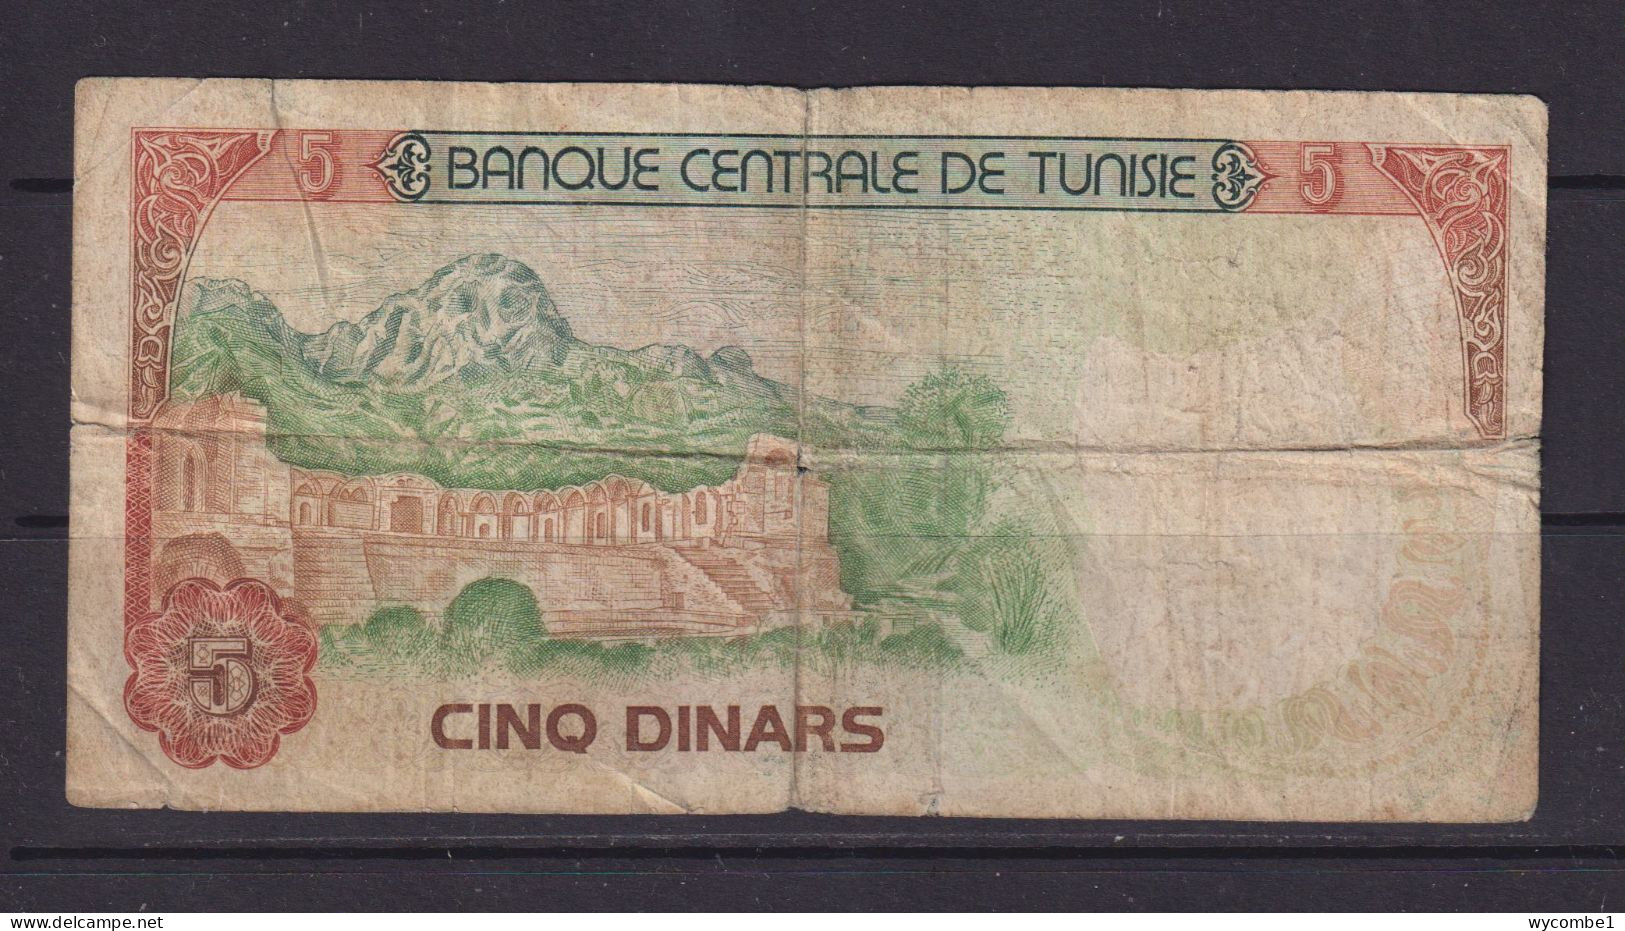 TUNISIA - 1985 5 Dinars Circulated Banknote - Tunisia